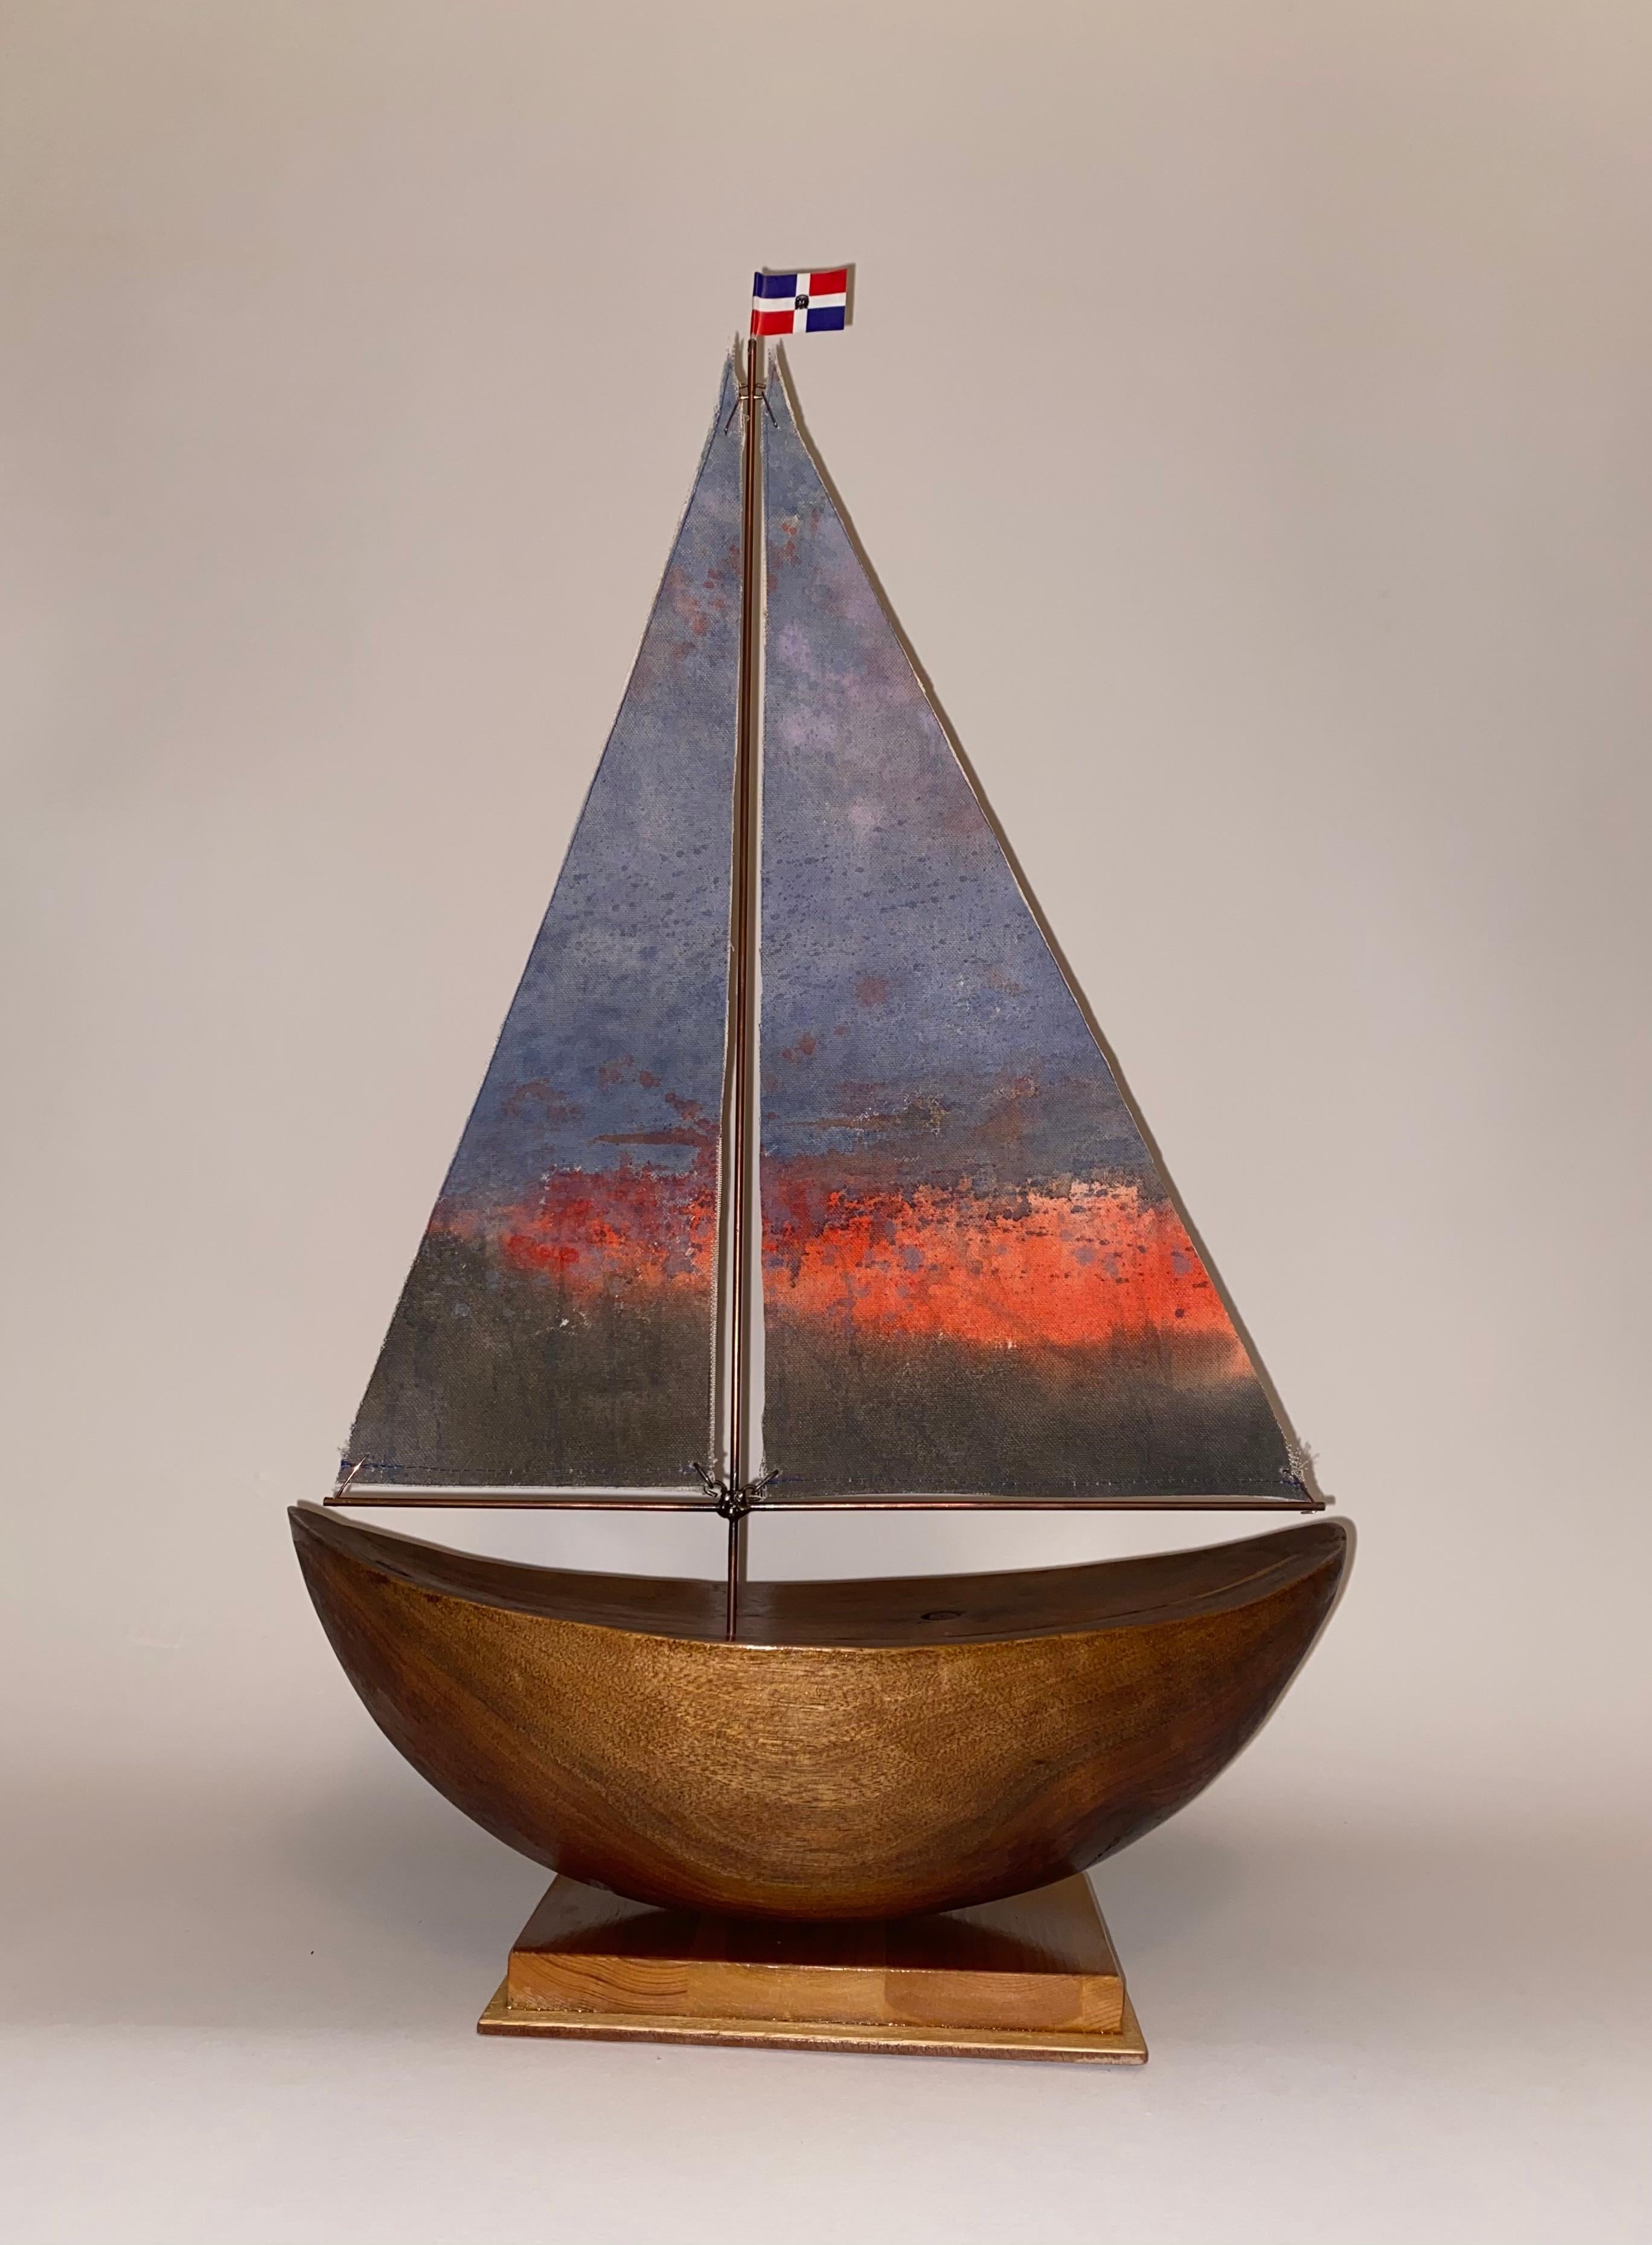 Pedro Villalta Still-Life Sculpture - Boat with Sunset Sail